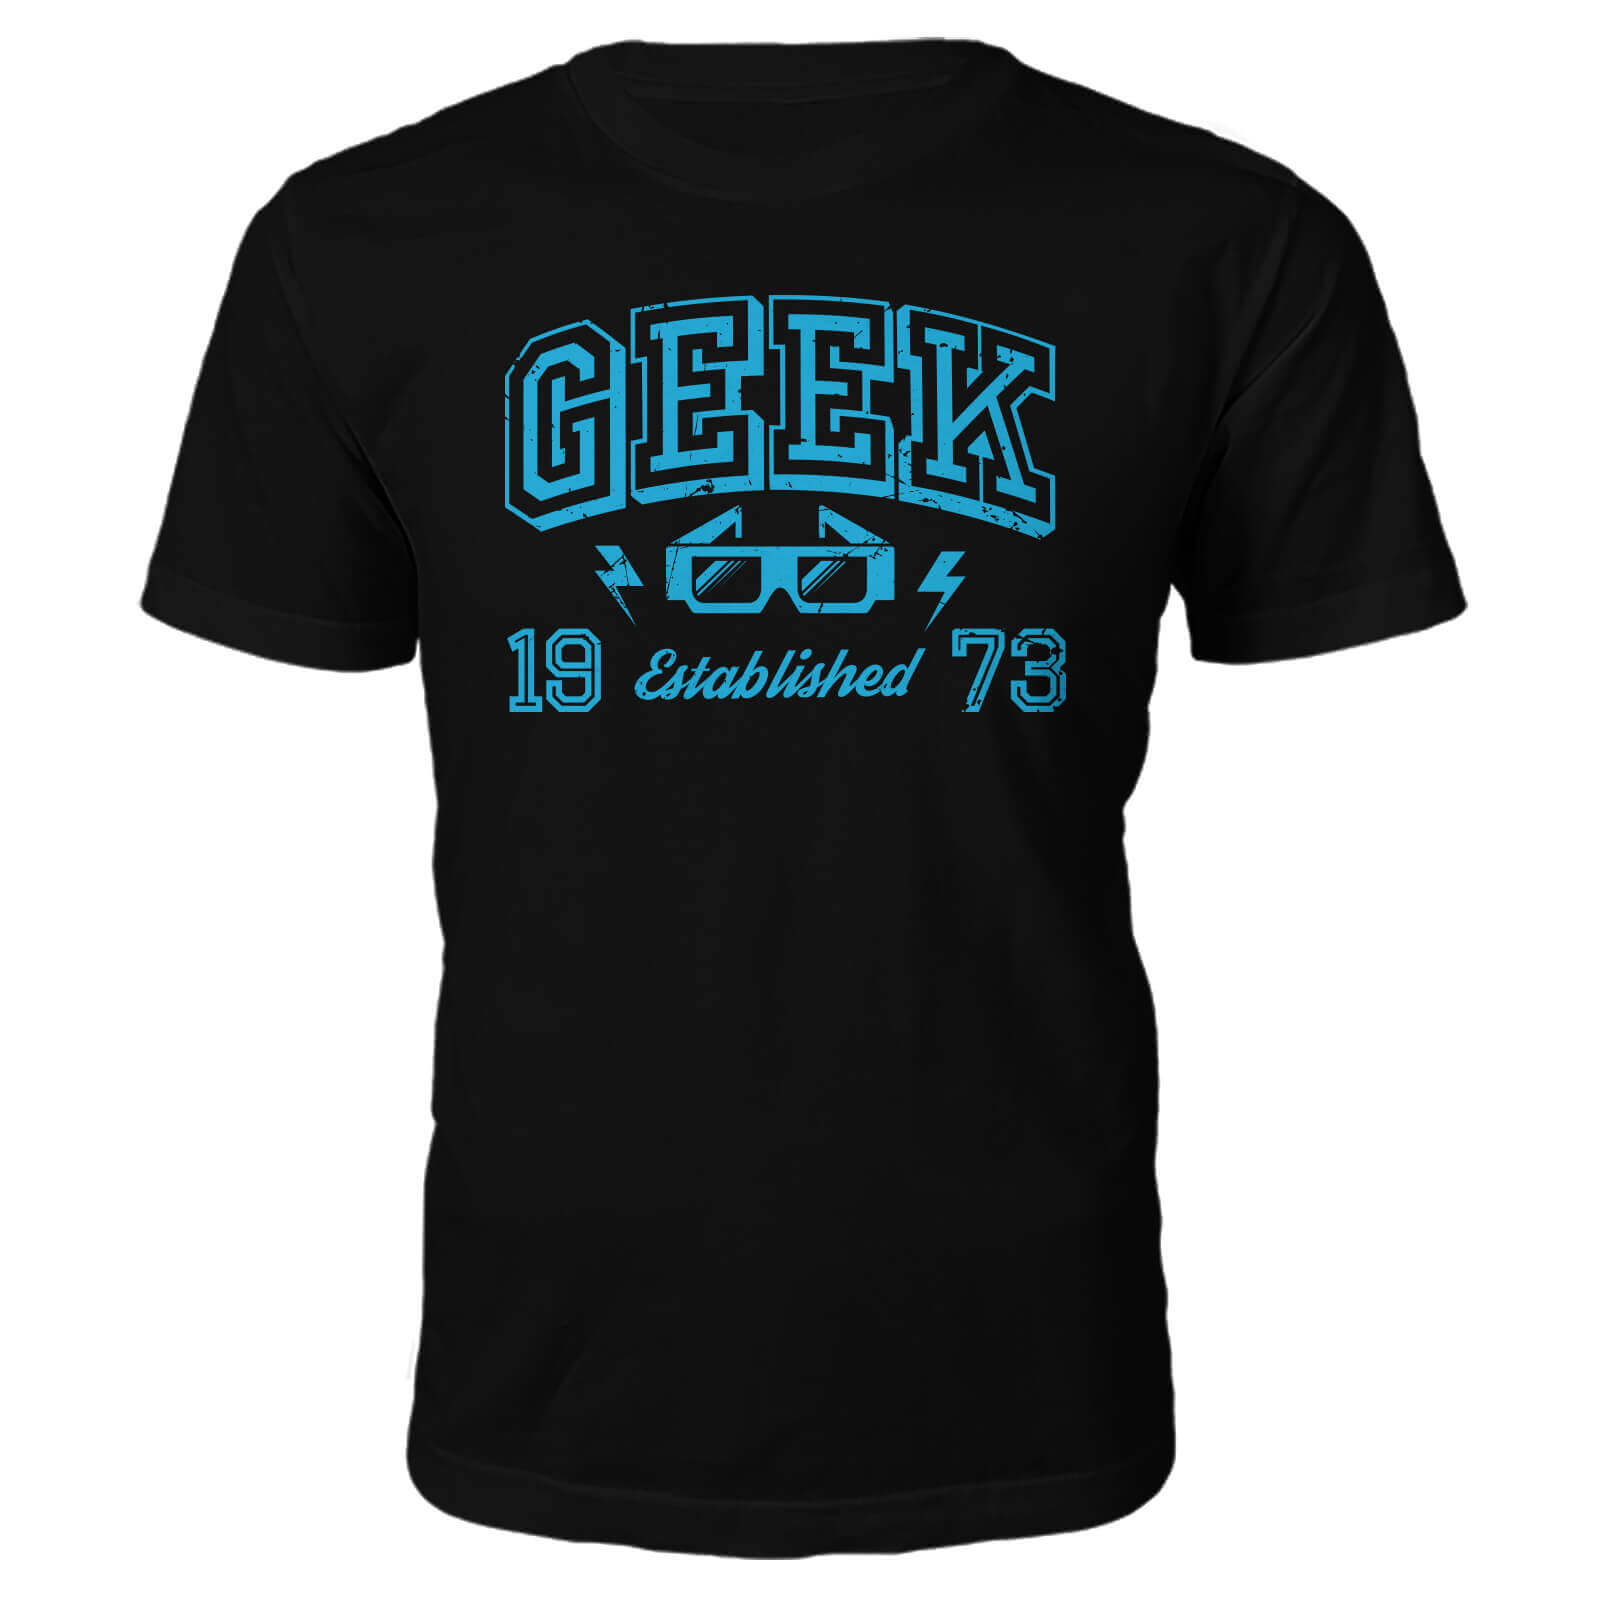 Geek Established 1970's T-Shirt- Black - XL - 1973